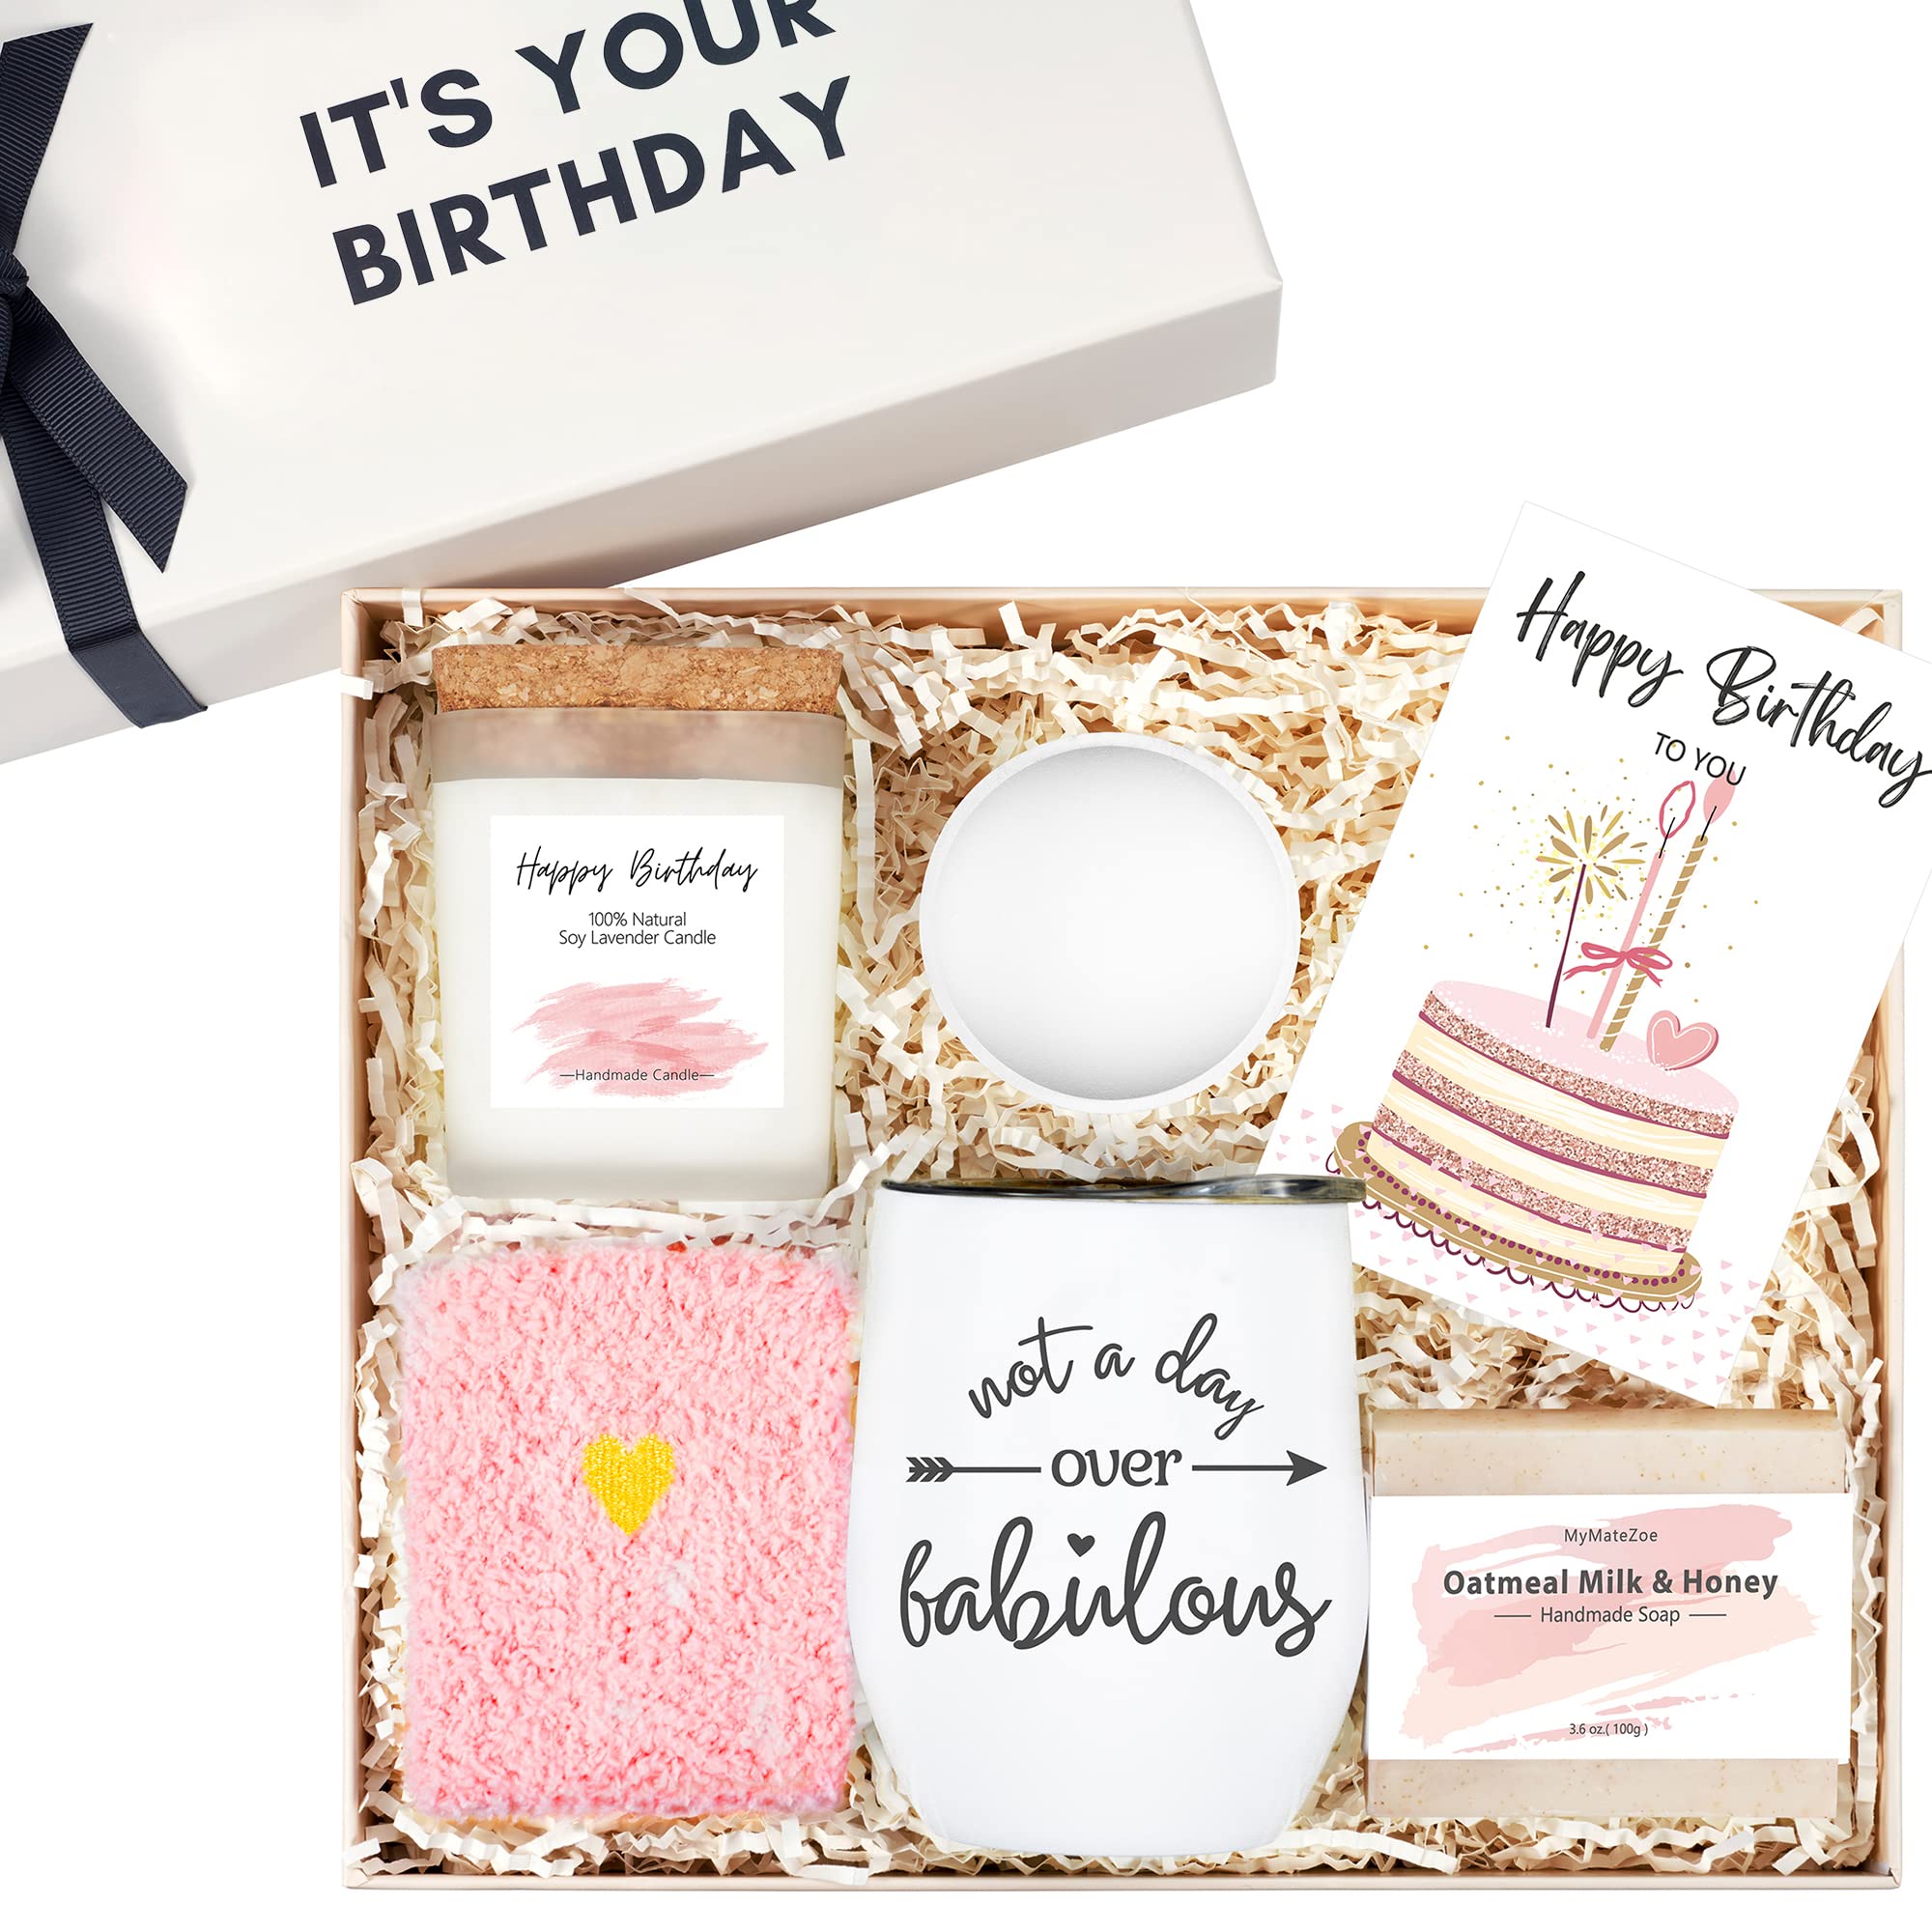 Buy & Send Birthday Gift for Best Friend | Online Birthday gifts for friends  - MyFlowerTree